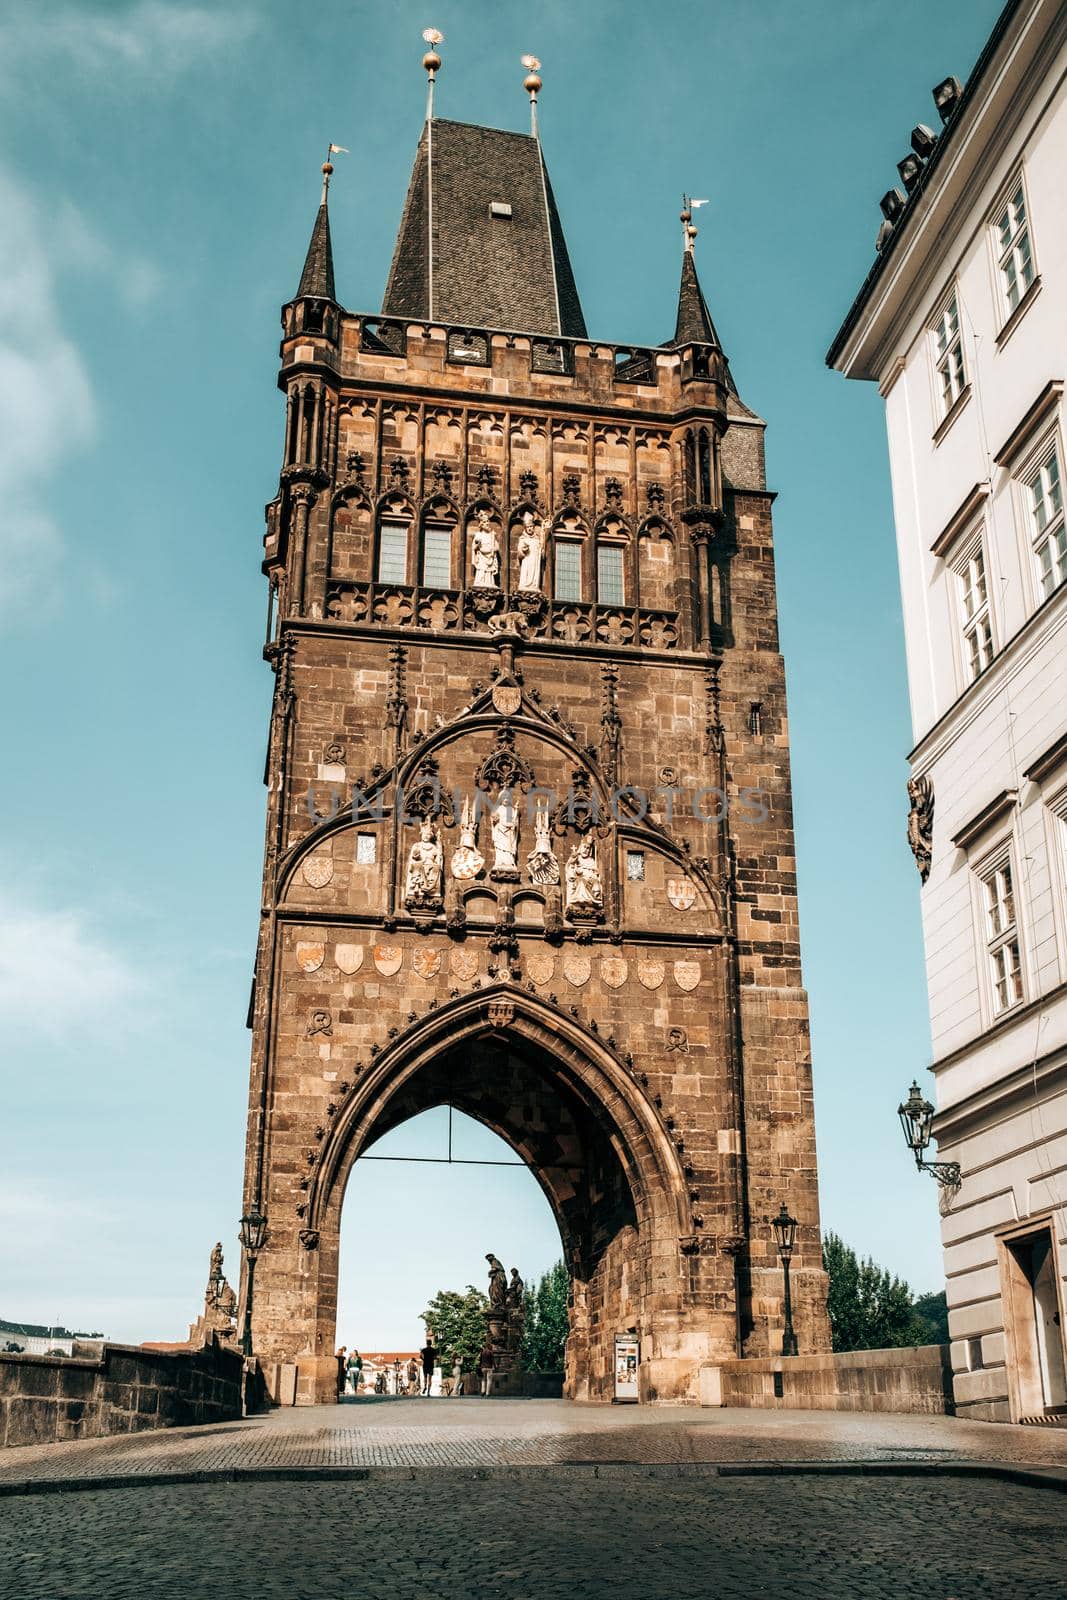 Old town bridge tower on Charles Bridge - Karluv Most. Prague, Czech Republic by kristina_kokhanova